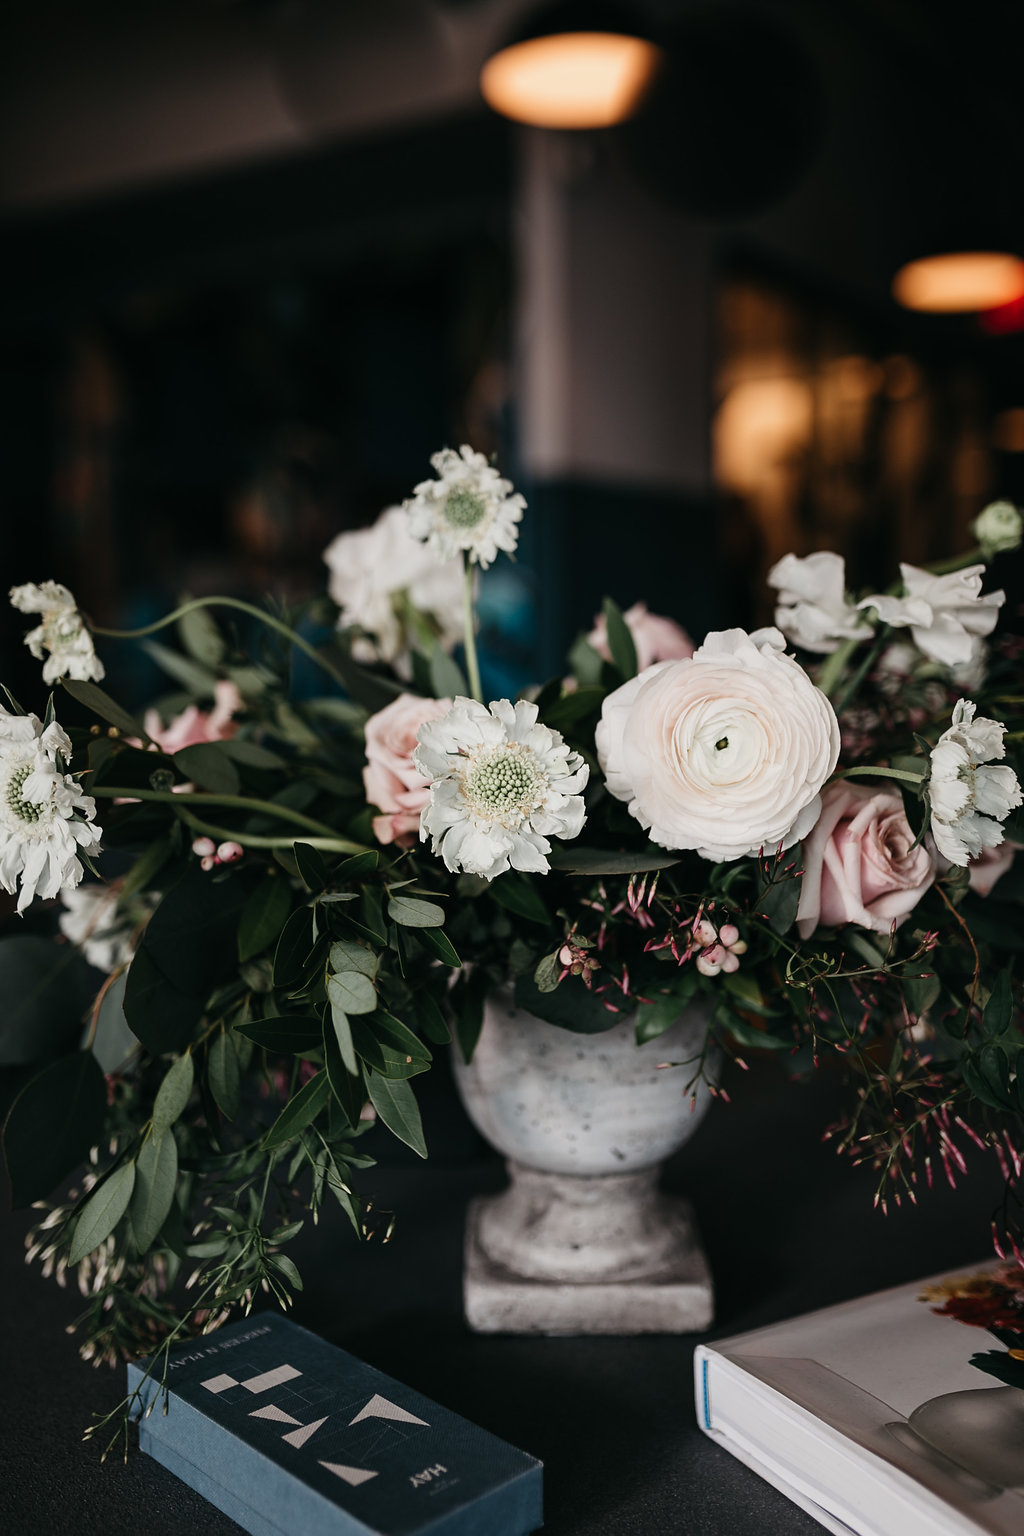 Prim and Lovely floral arrangements